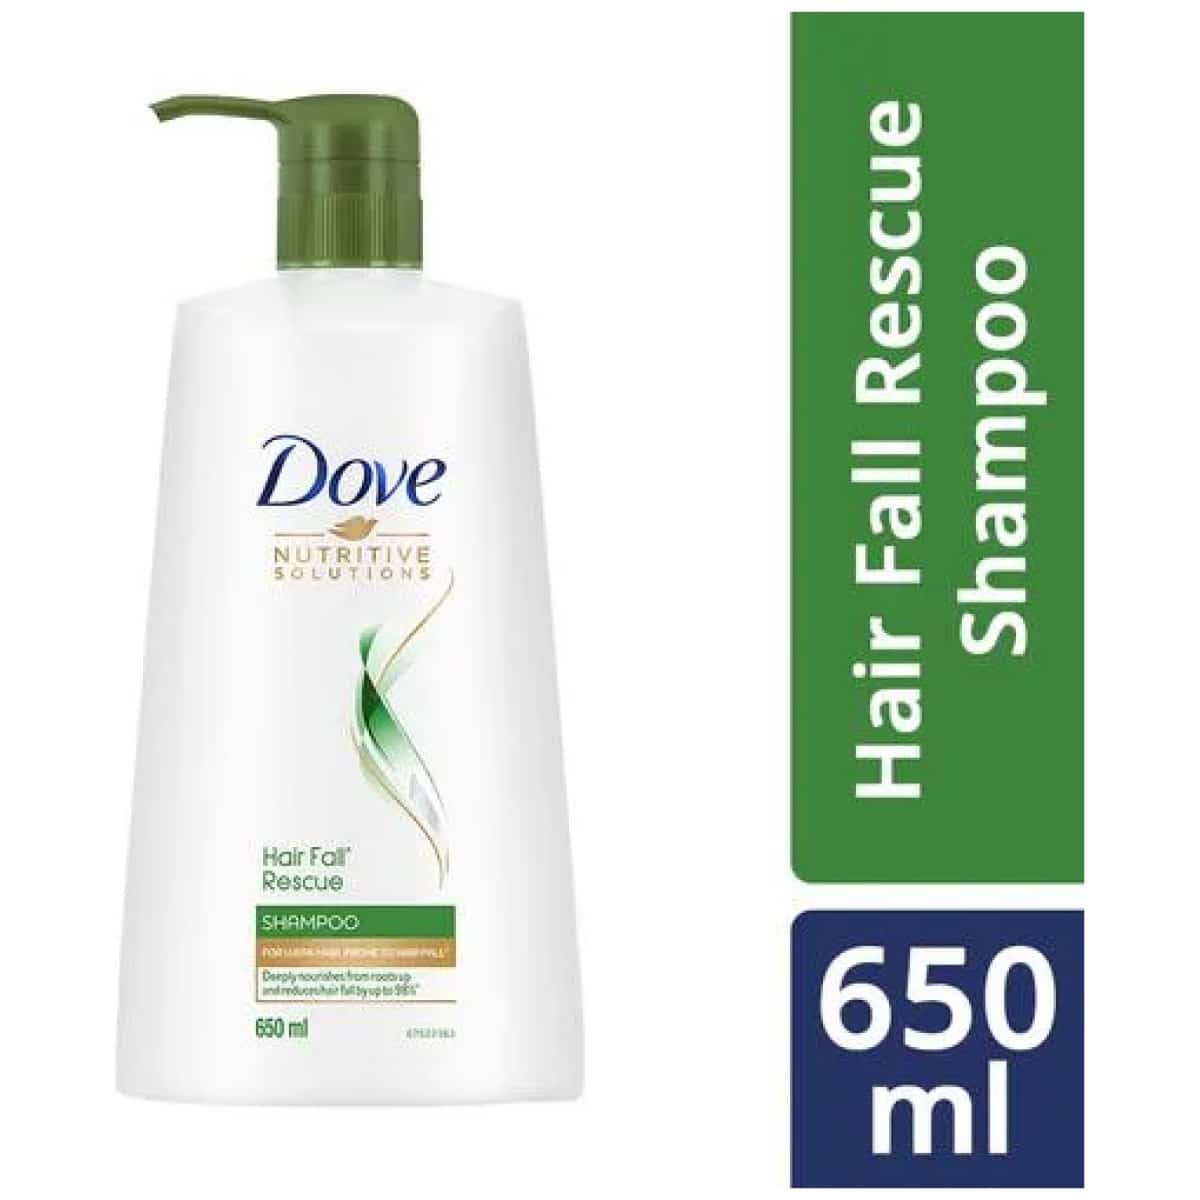 Dove Nutritive Solution Hair Fall Rescue Shampoo 650Ml